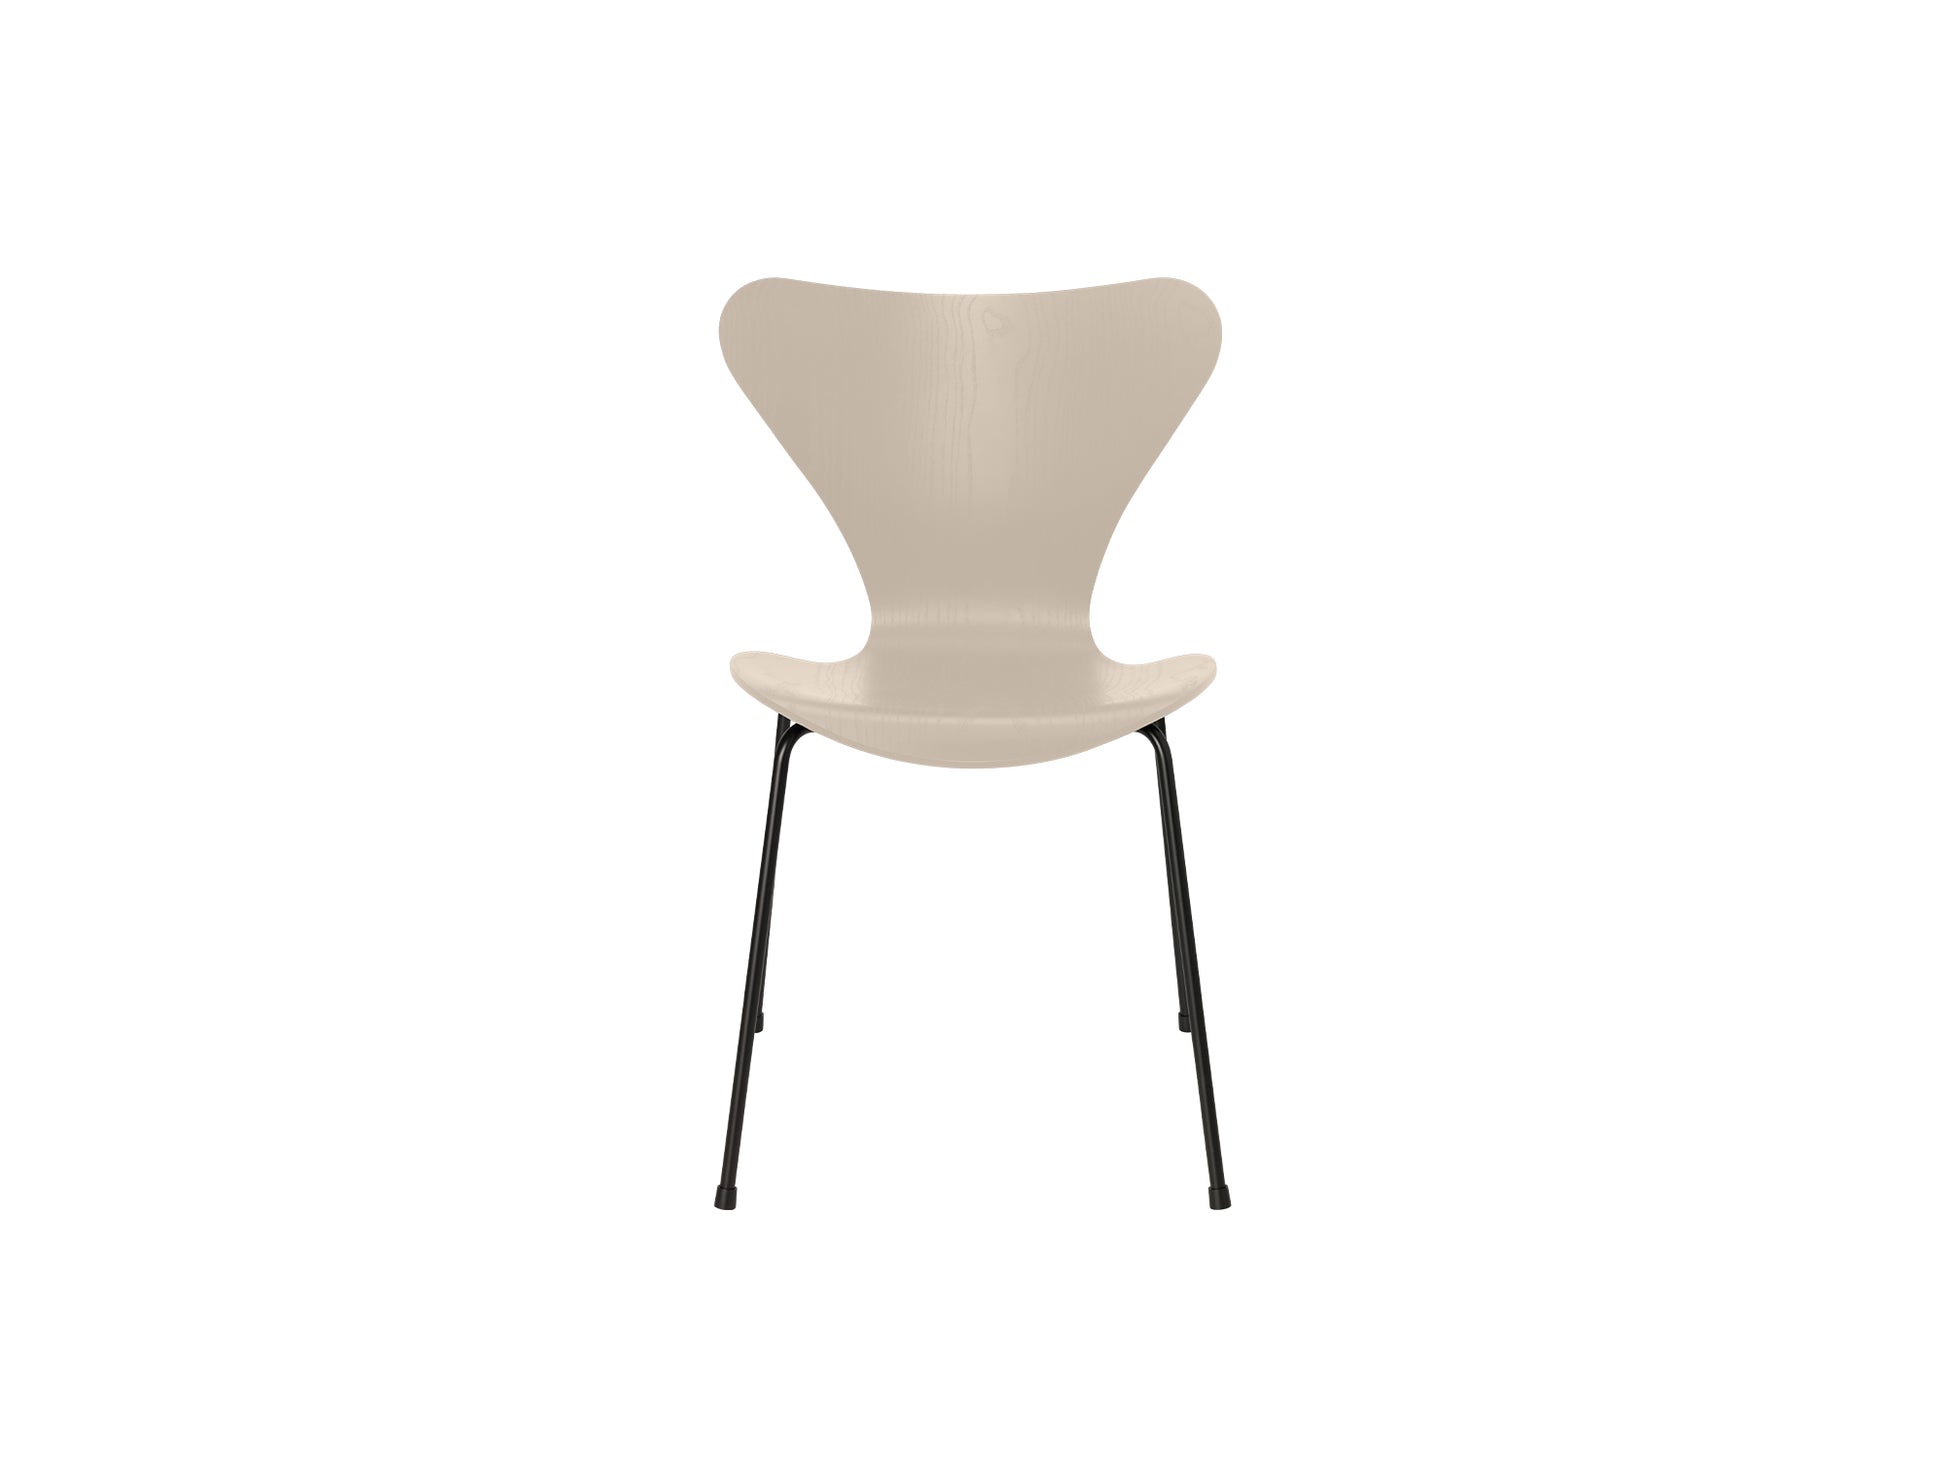 Series 7™ 3107 Dining Chair by Fritz Hansen - Light Beige Coloured Ash Veneer Shell / Black Steel